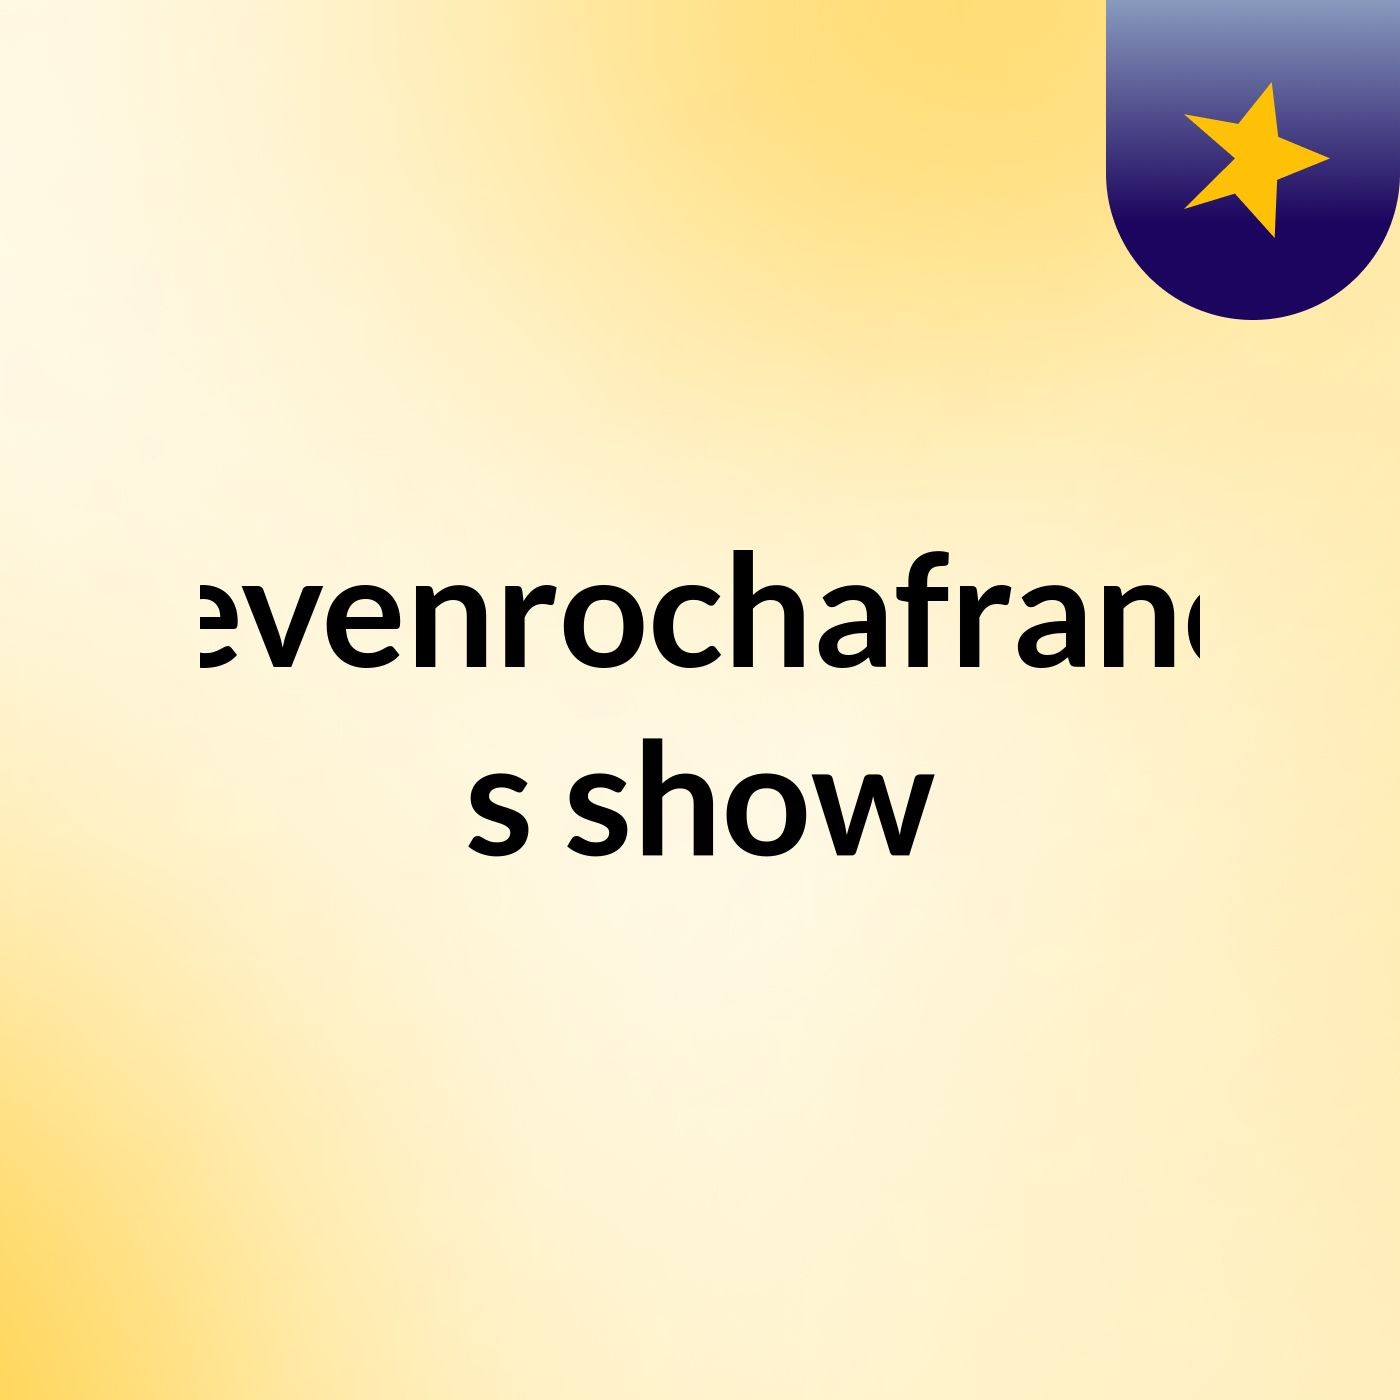 Kevenrochafranco's show